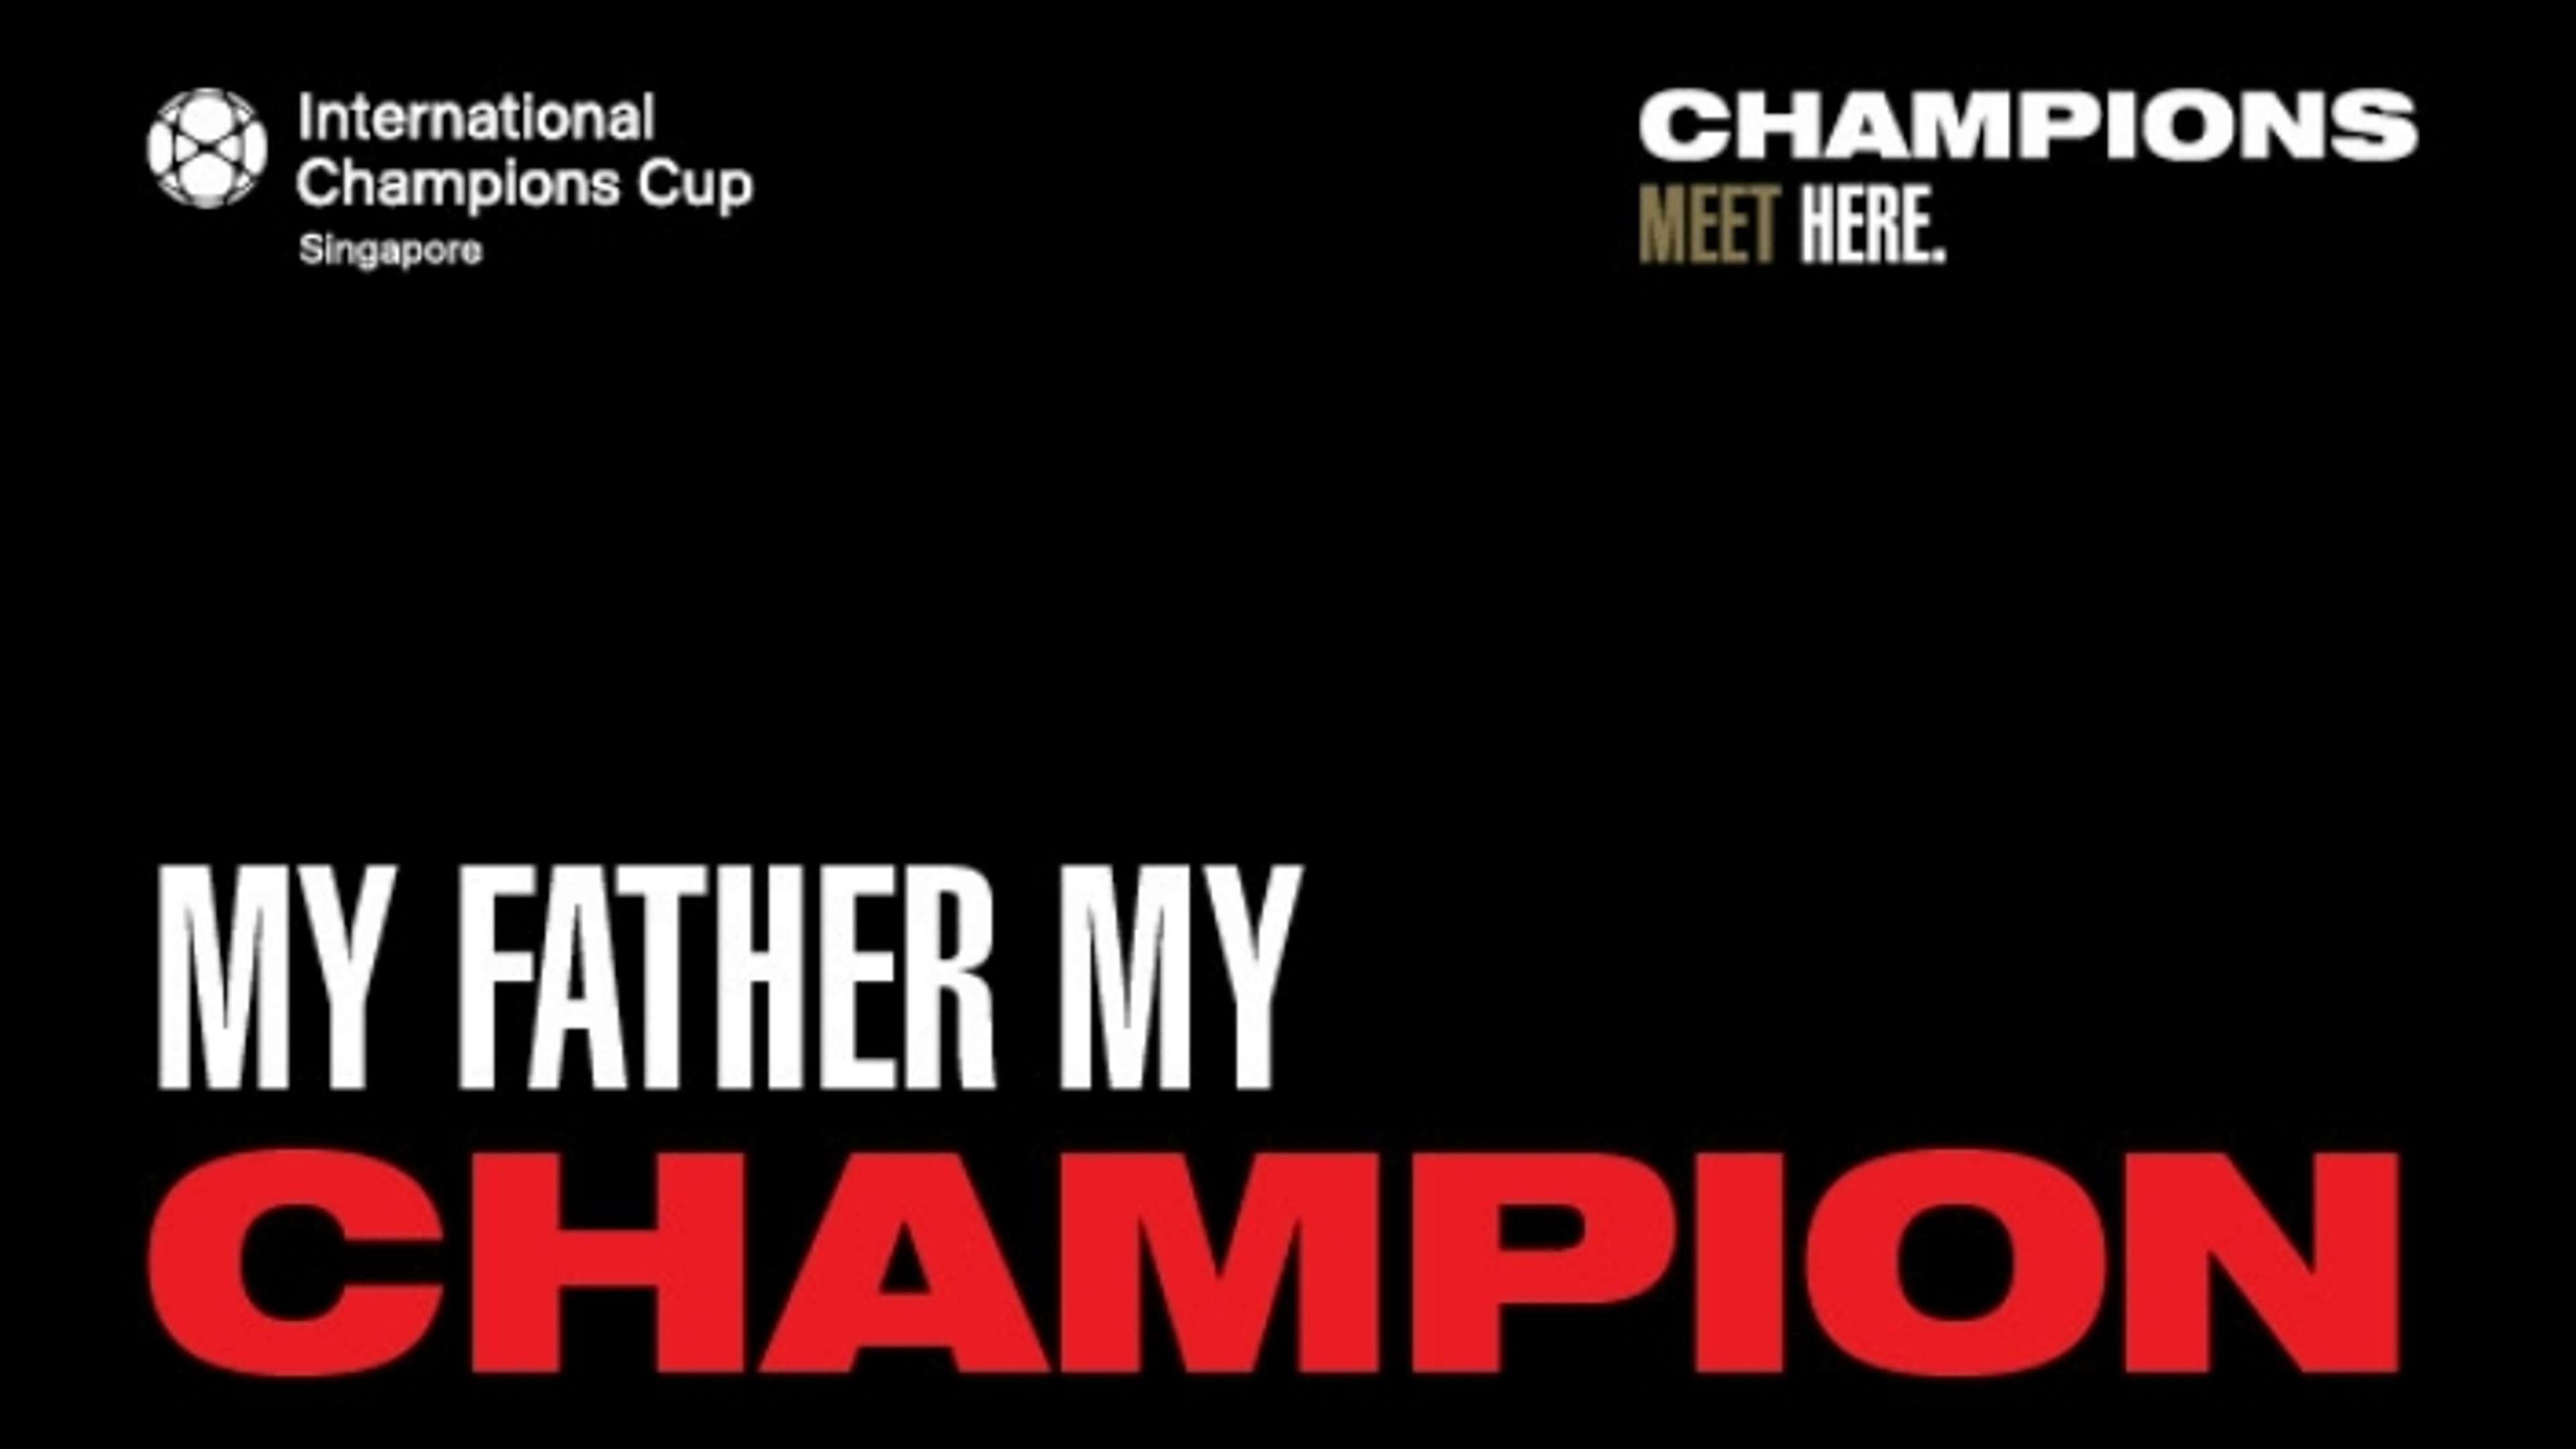 International Champions Cup 2018 promo